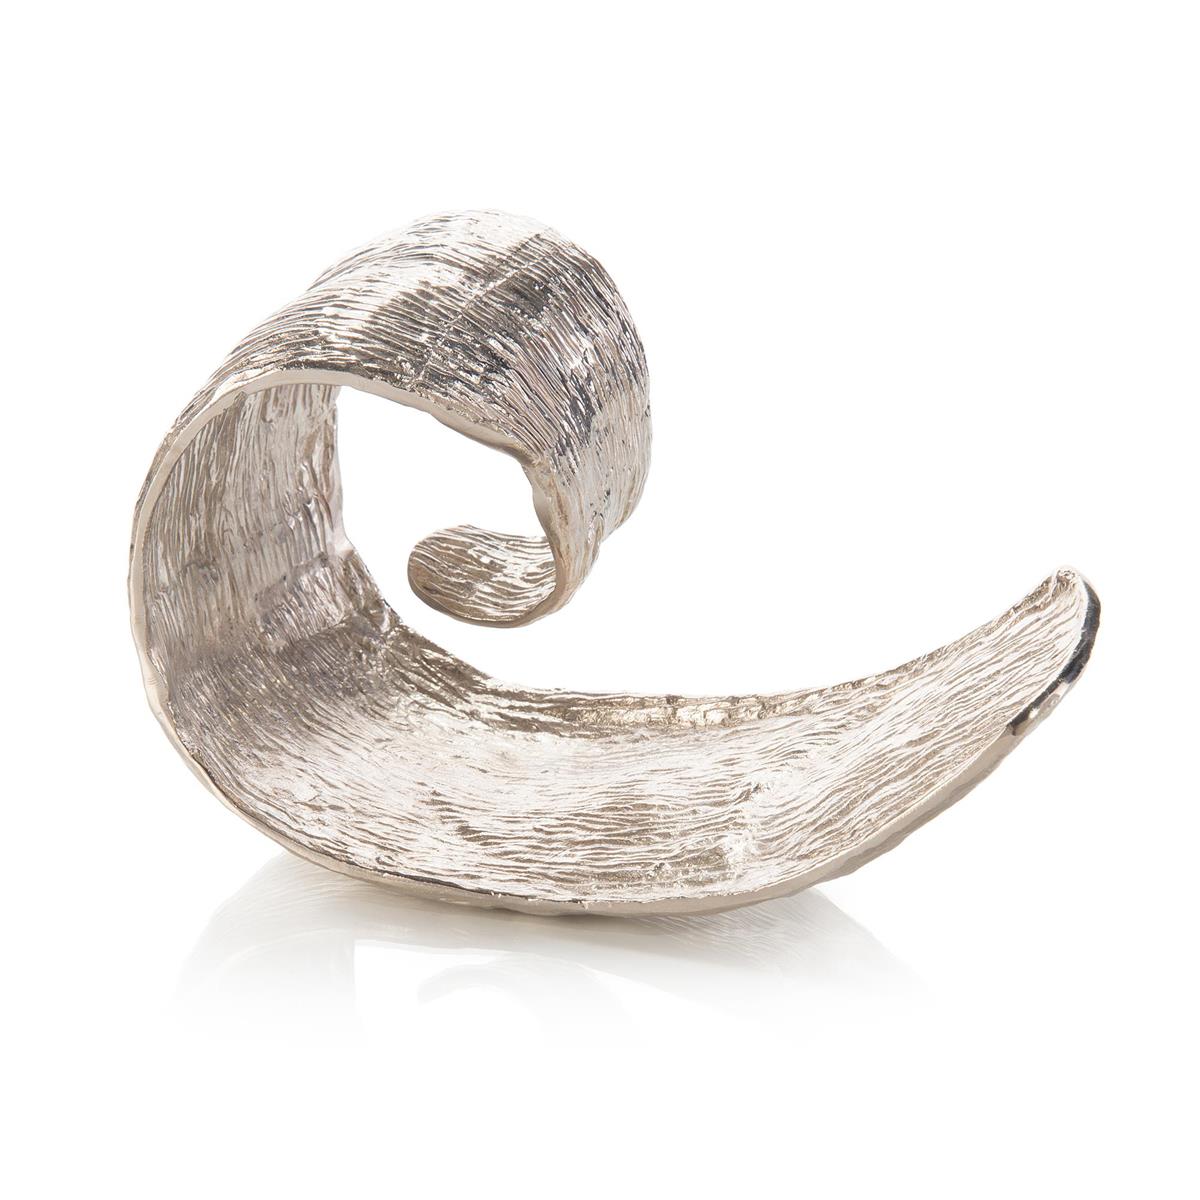 Organic Curl in Nickel-John Richard-Sculptures & Objects-Artistic Elements